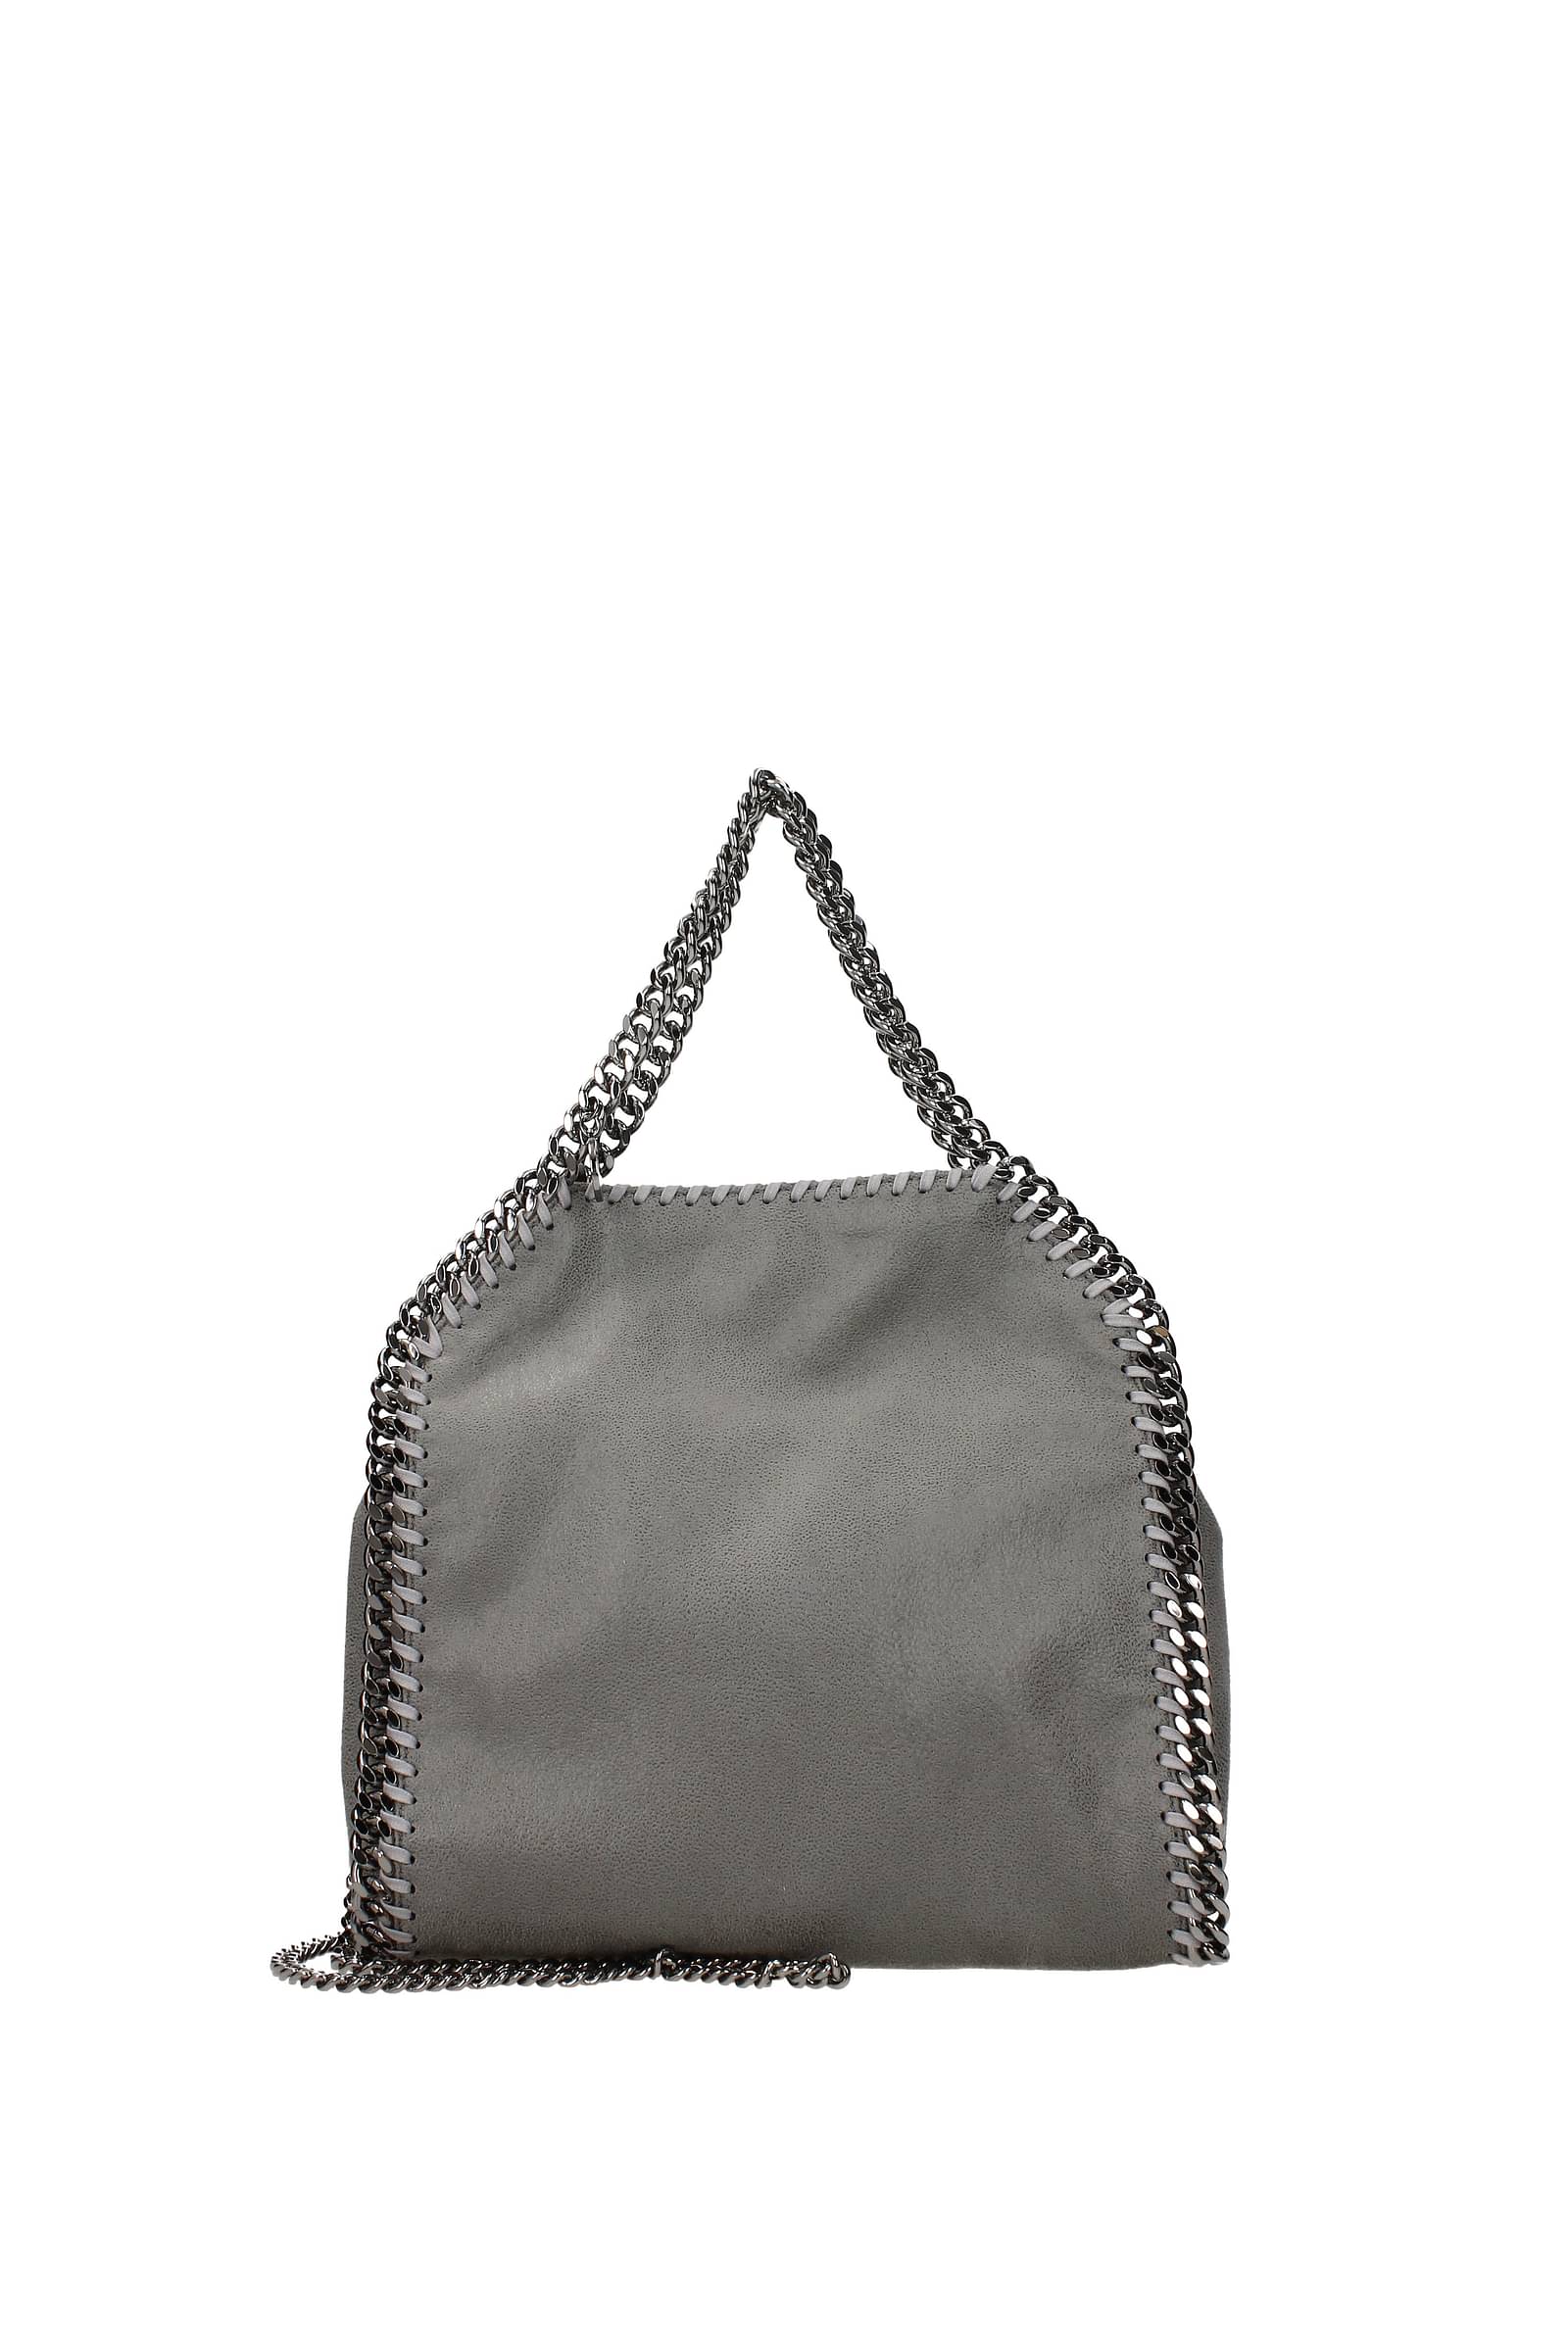 Stella McCartney Falabella Black Crystal Mesh Mini Soulder Bag | Liberty